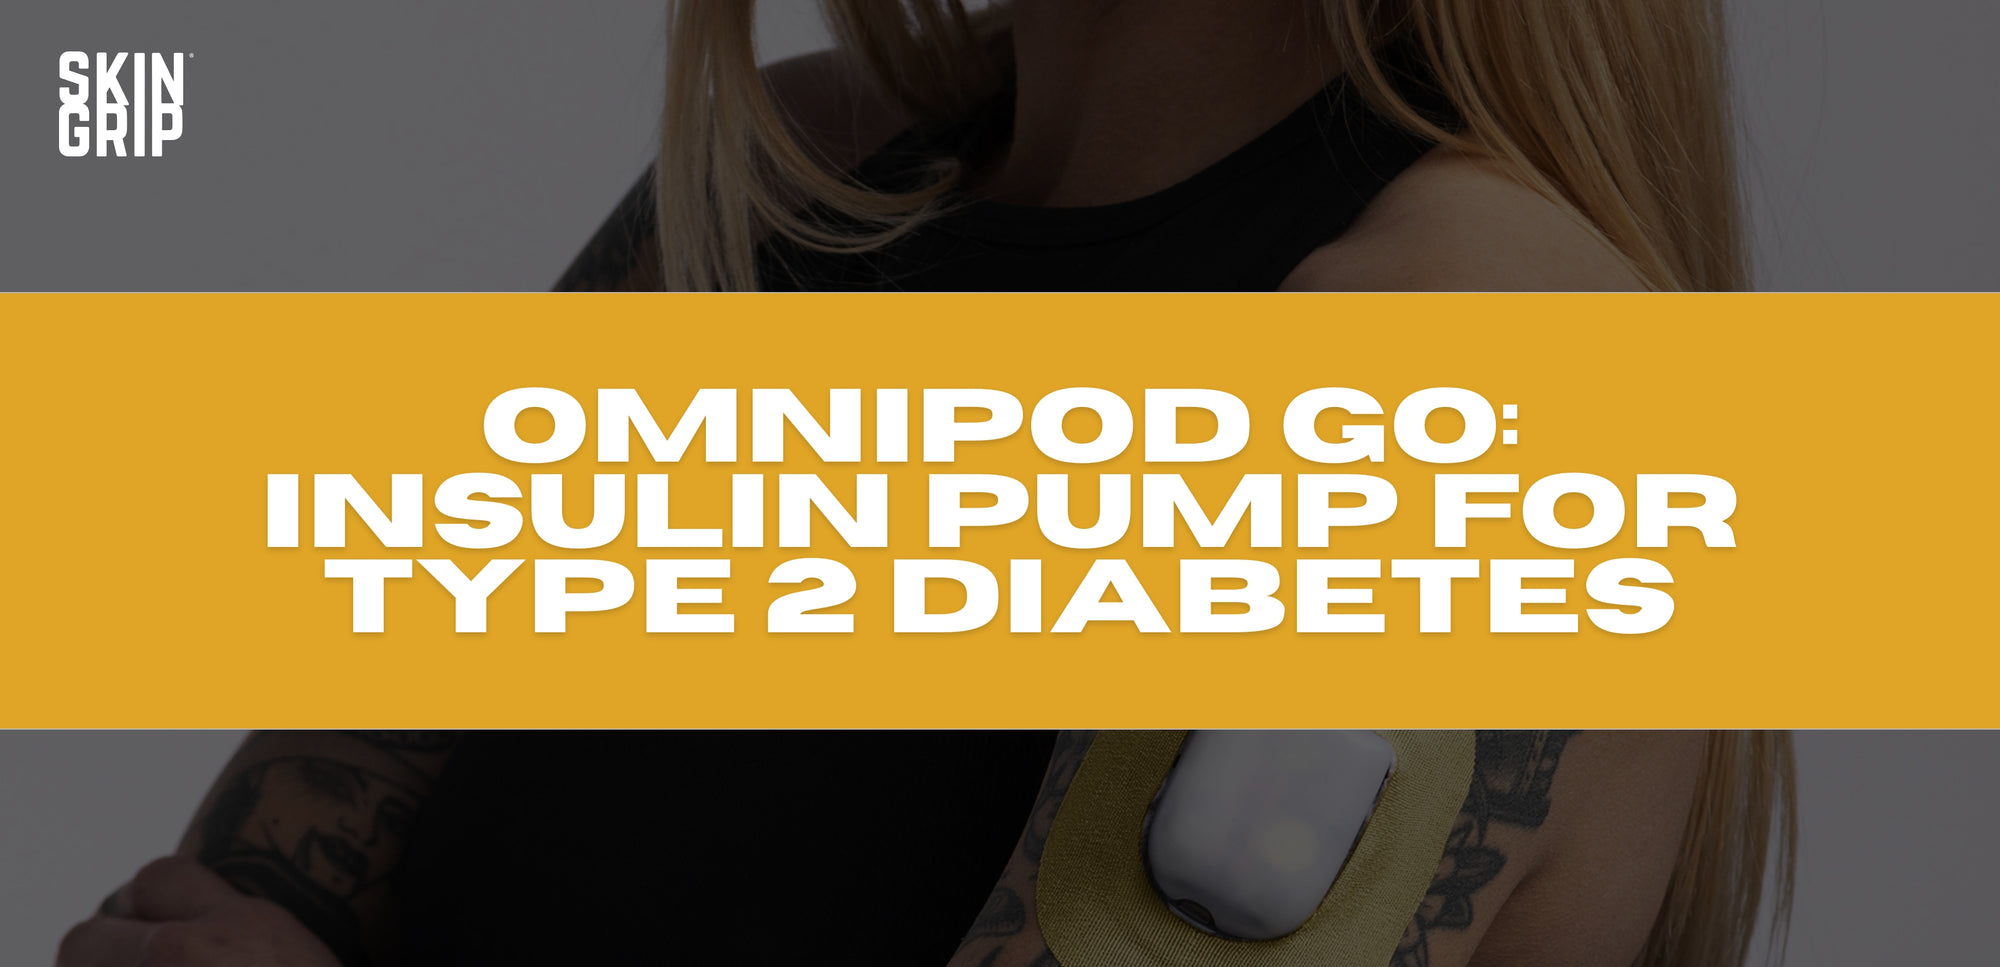 Omnipod GO: Insulin Pump for Type 2 Diabetes